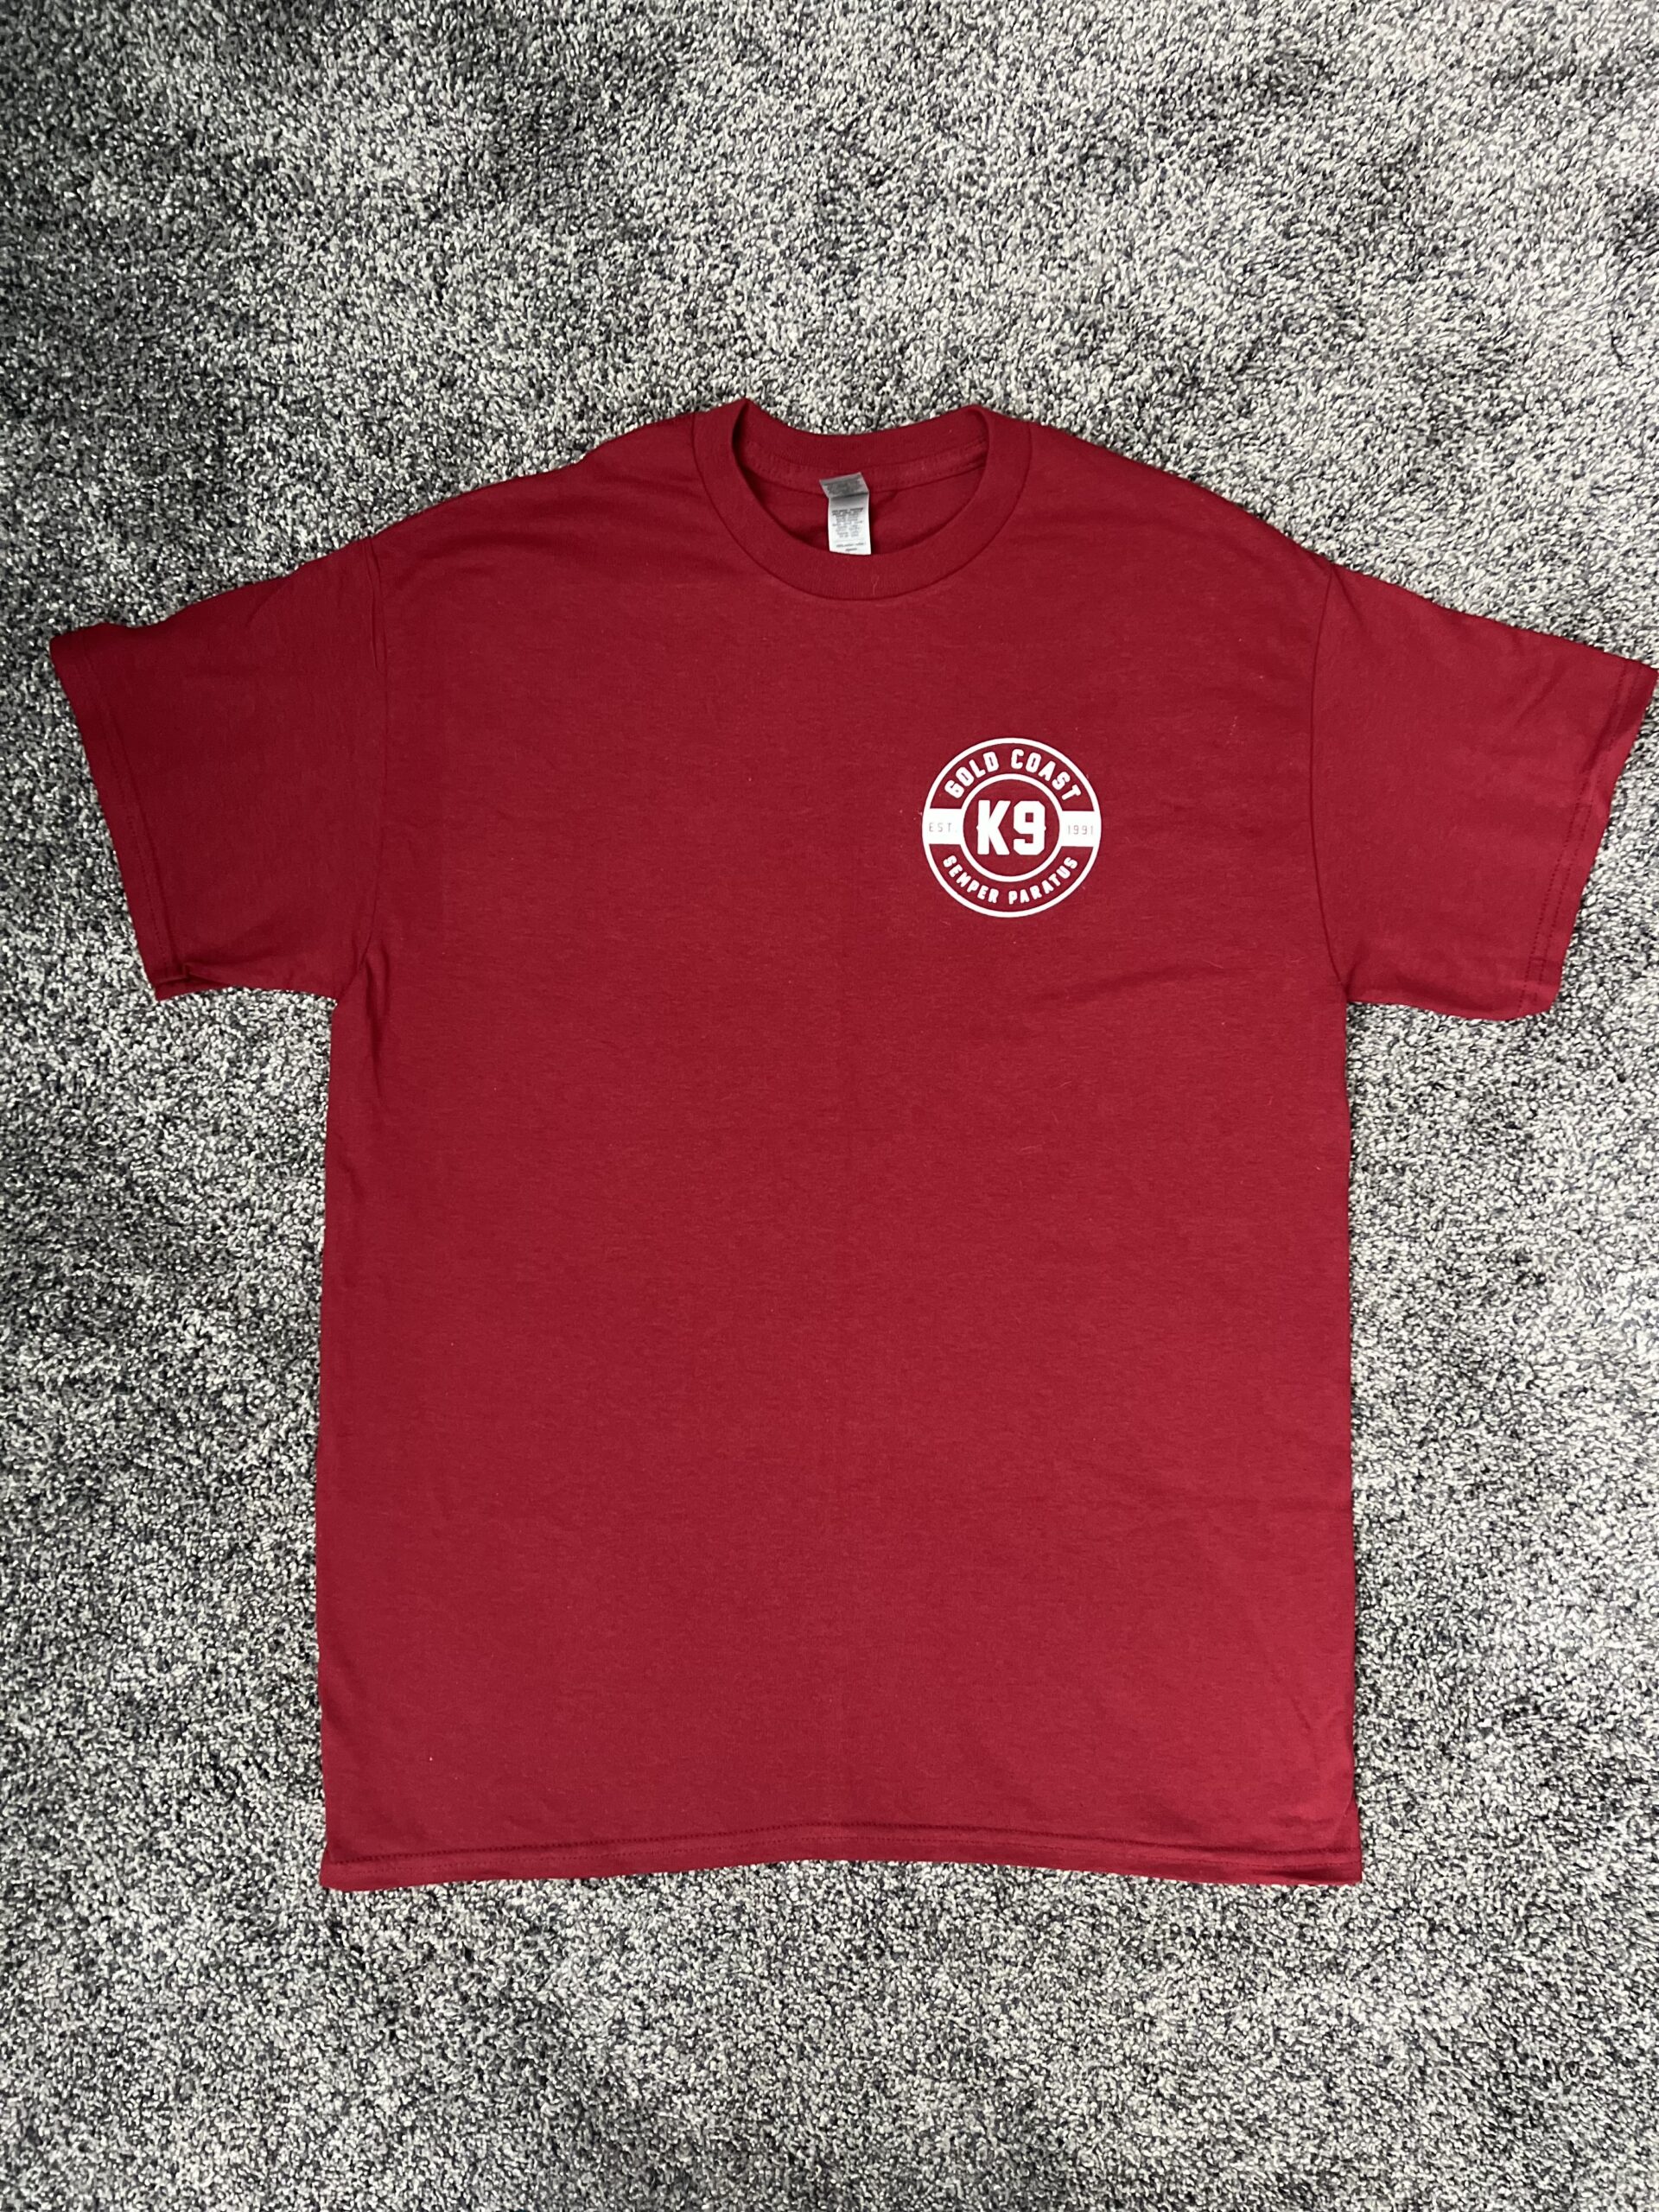 Short Sleeve Shirt – Red | Gold Coast K9